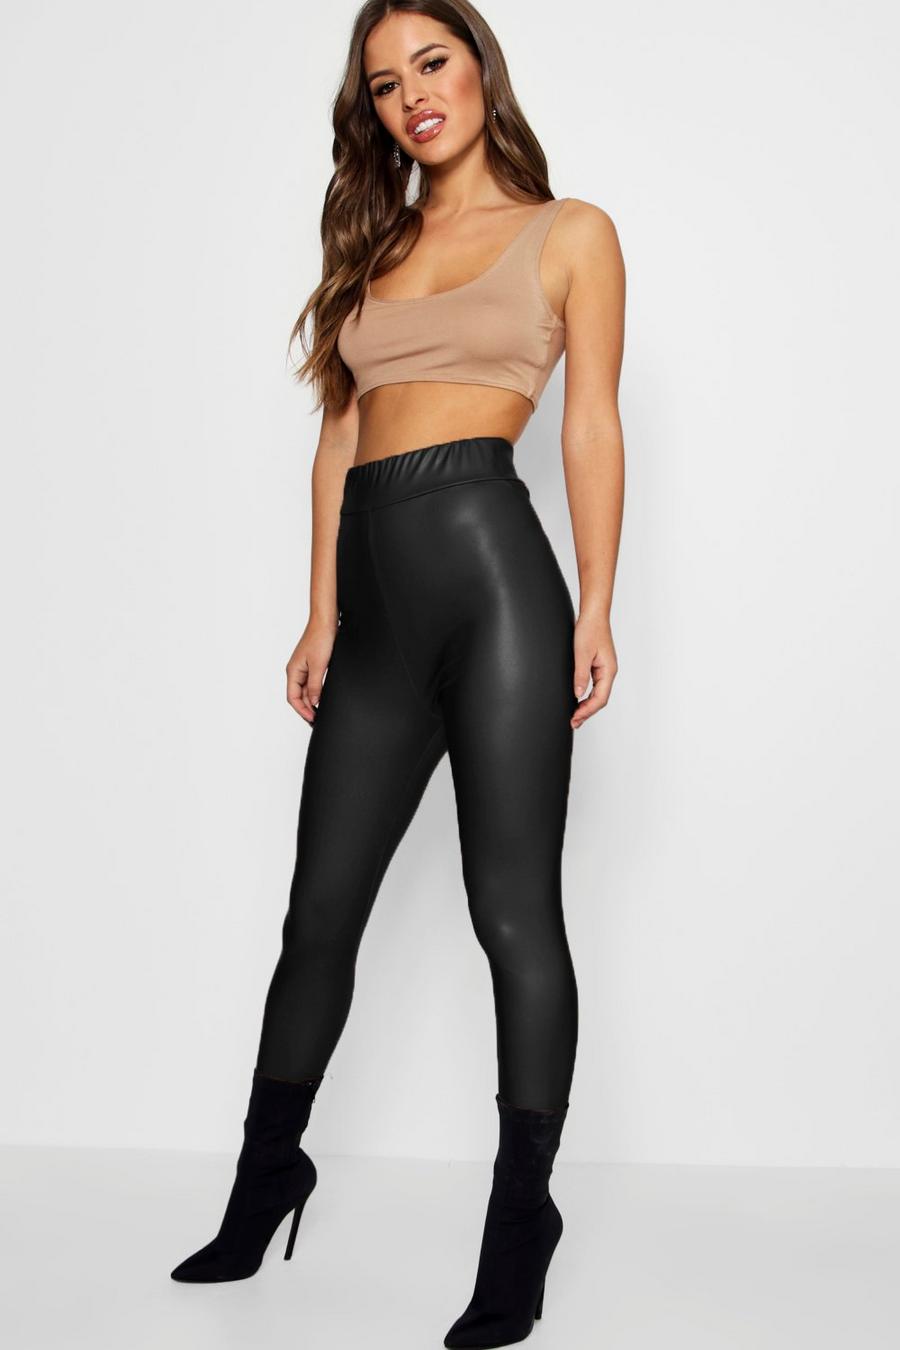 https://media.boohoo.com/i/boohoo/pzz91913_black_xl/female-black-petite--matte-leather-look-high-waist-leggings/?w=900&qlt=default&fmt.jp2.qlt=70&fmt=auto&sm=fit